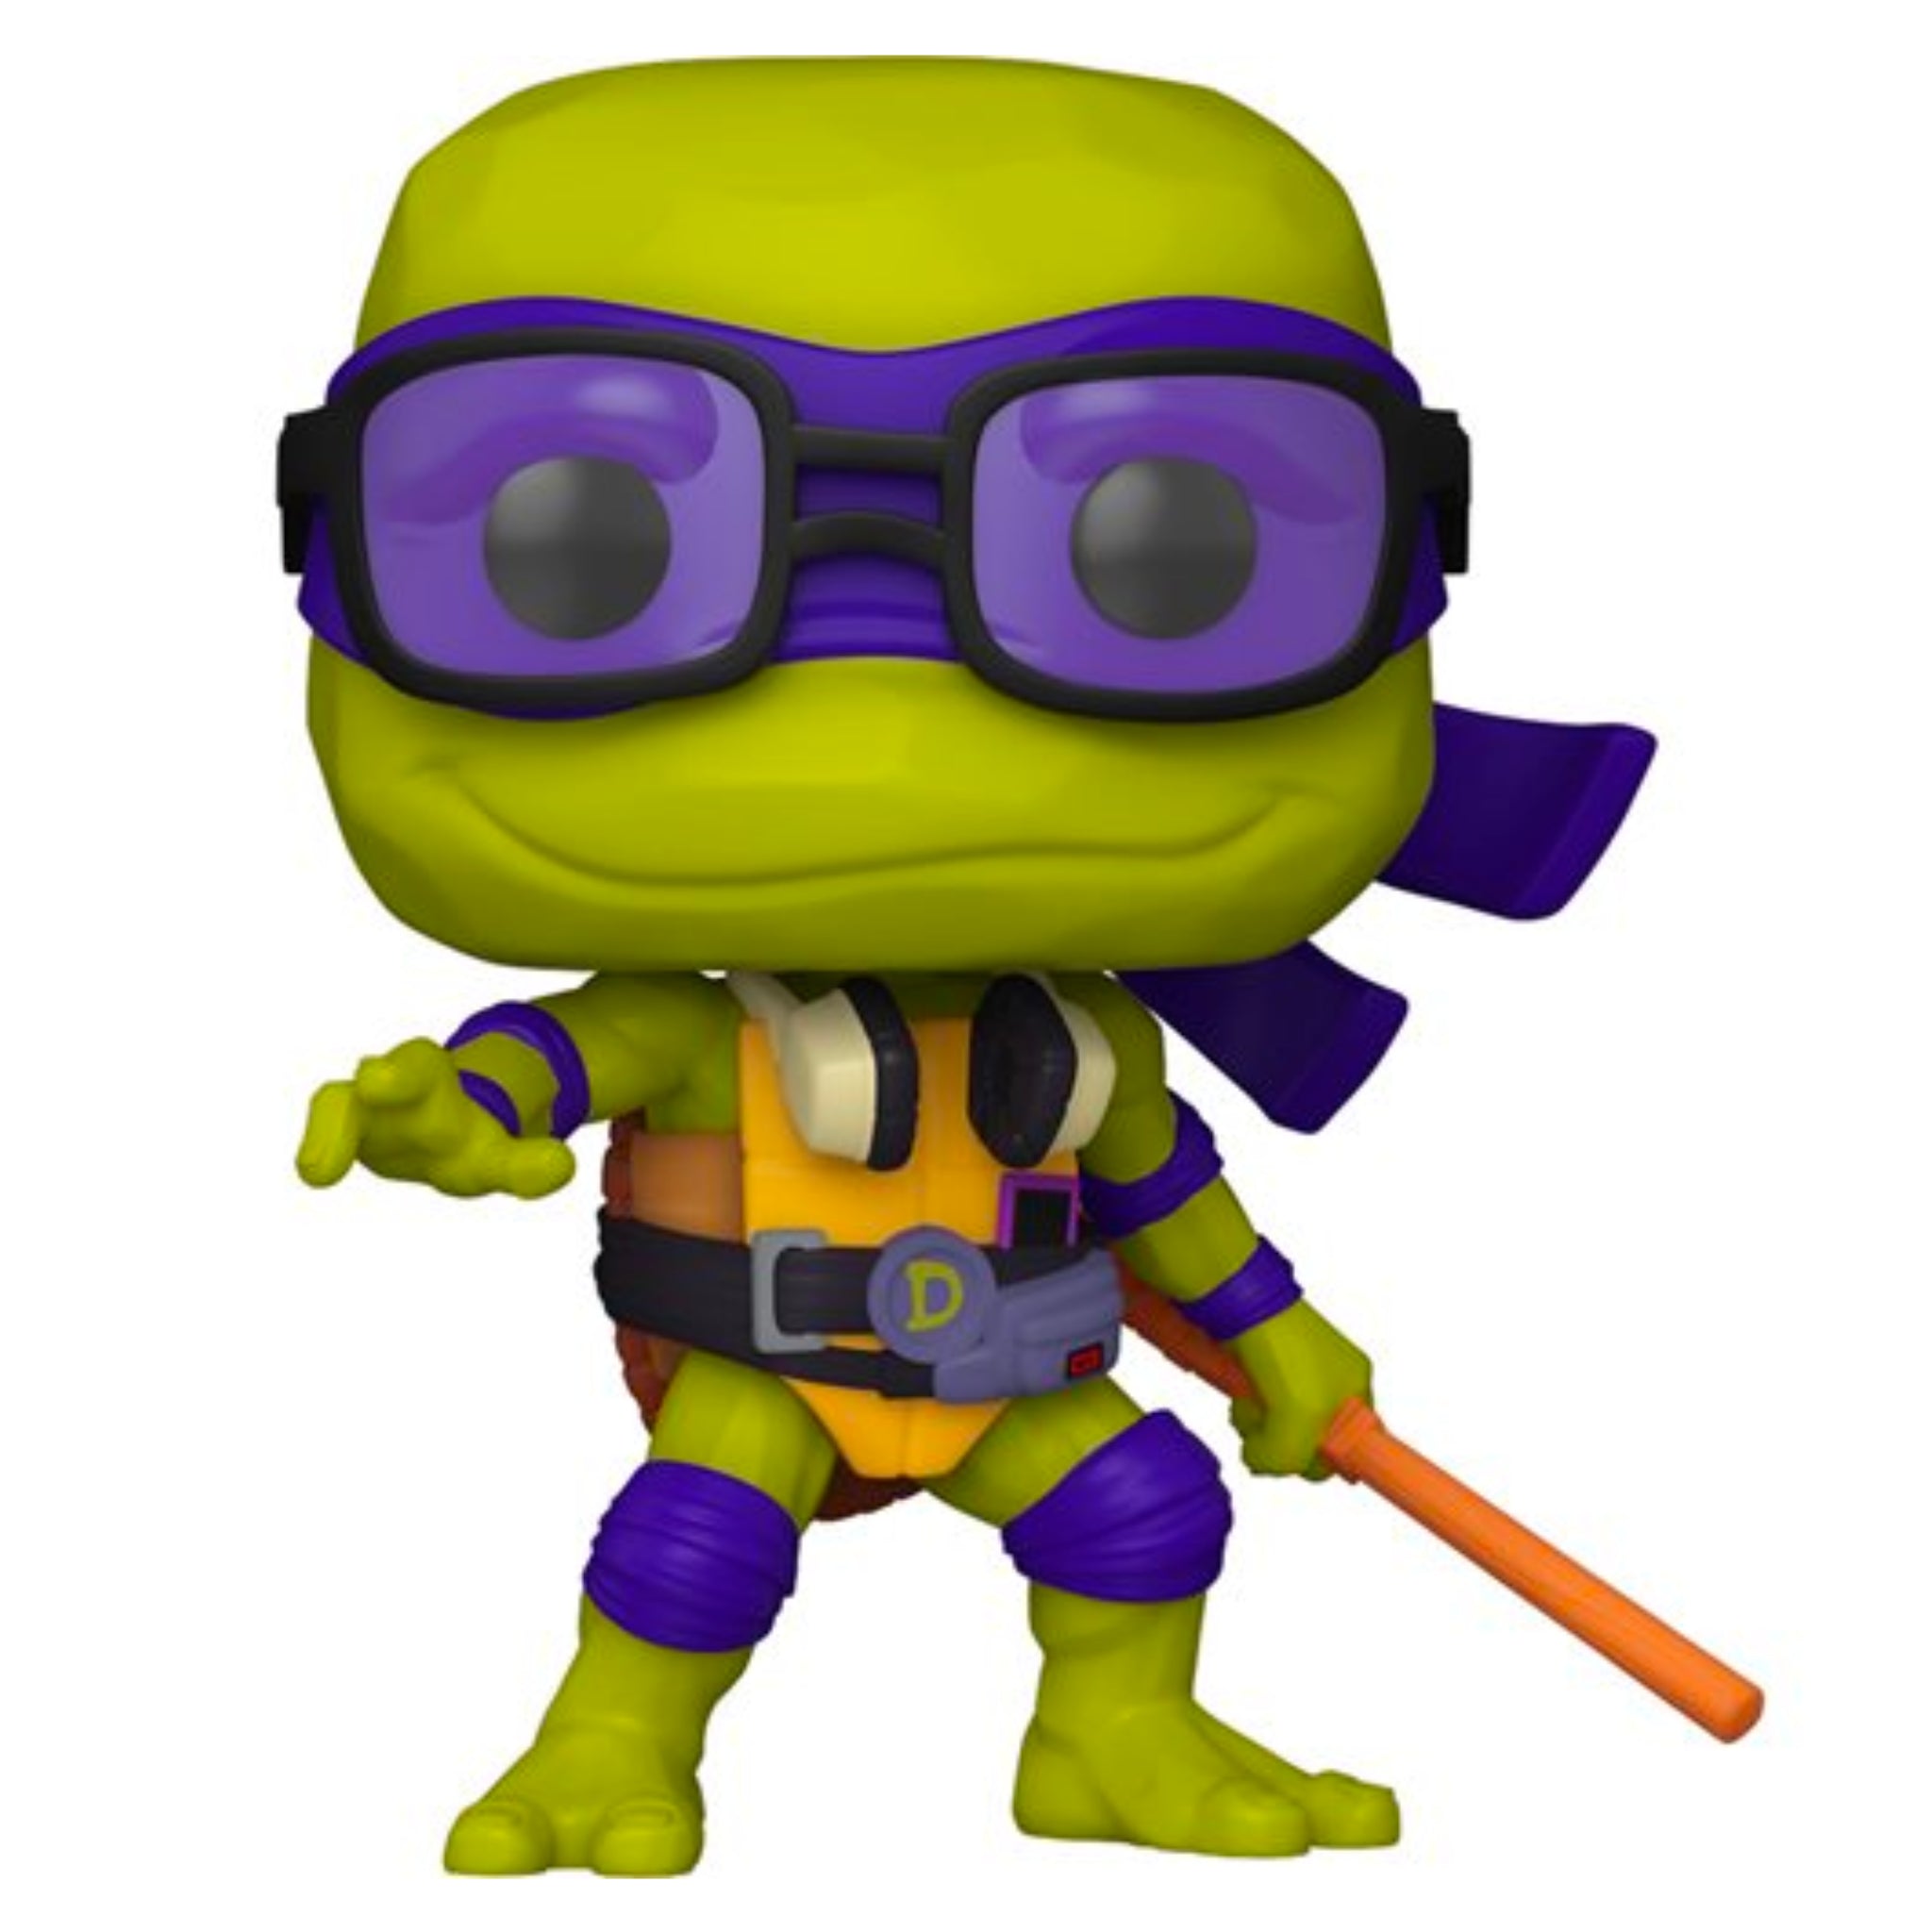 Donatello Funko Pop!